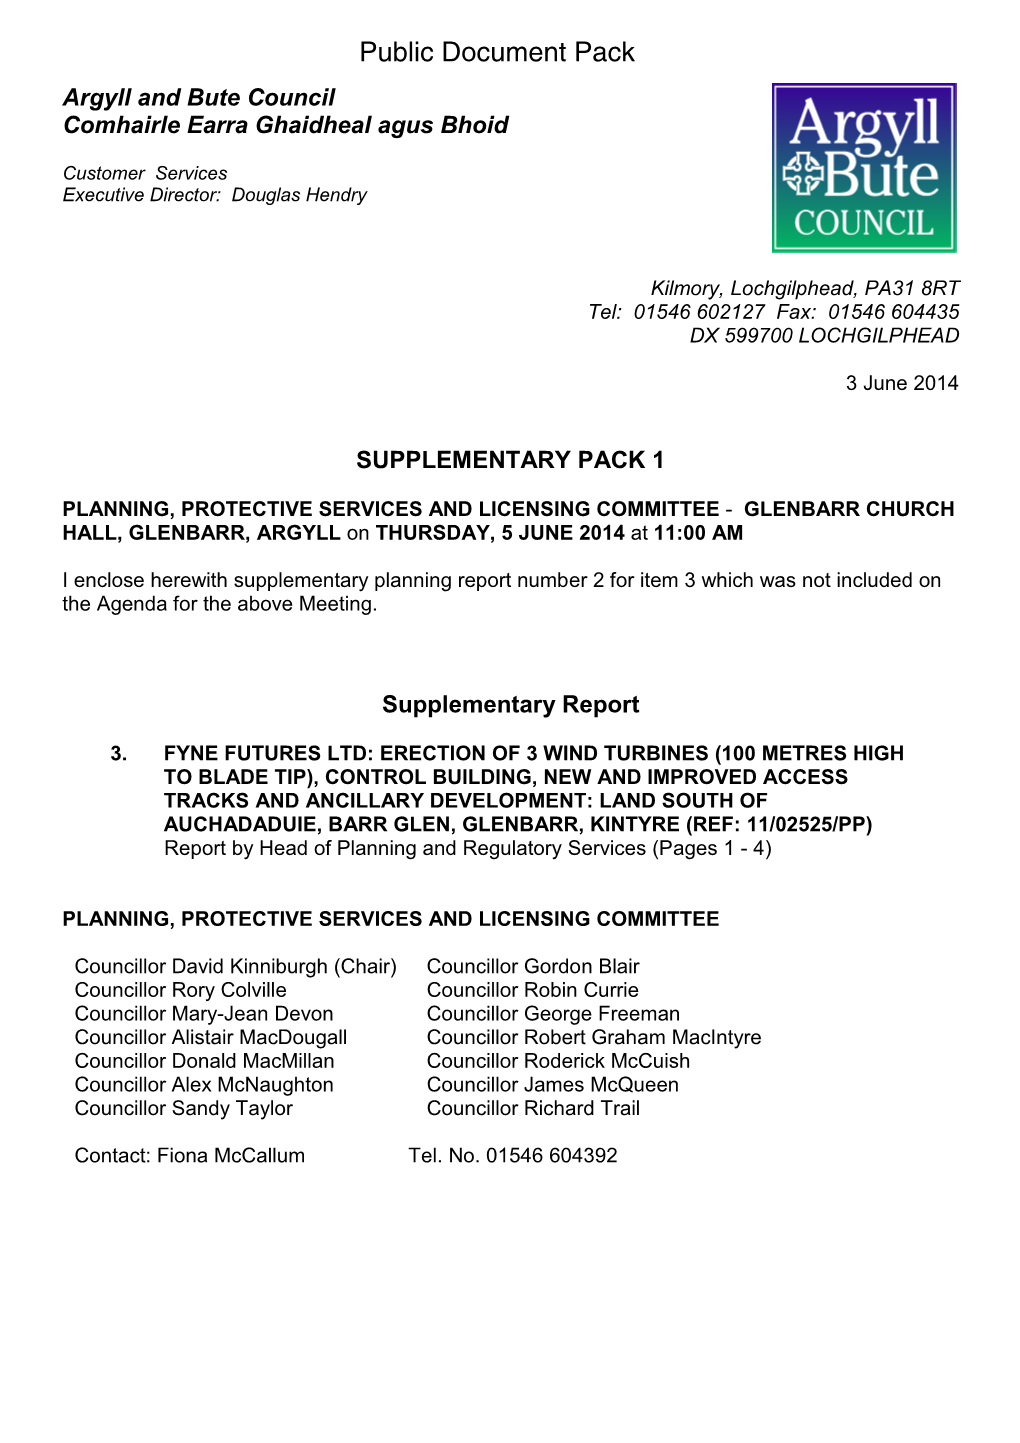 Public Document Pack Argyll and Bute Council Comhairle Earra Ghaidheal Agus Bhoid